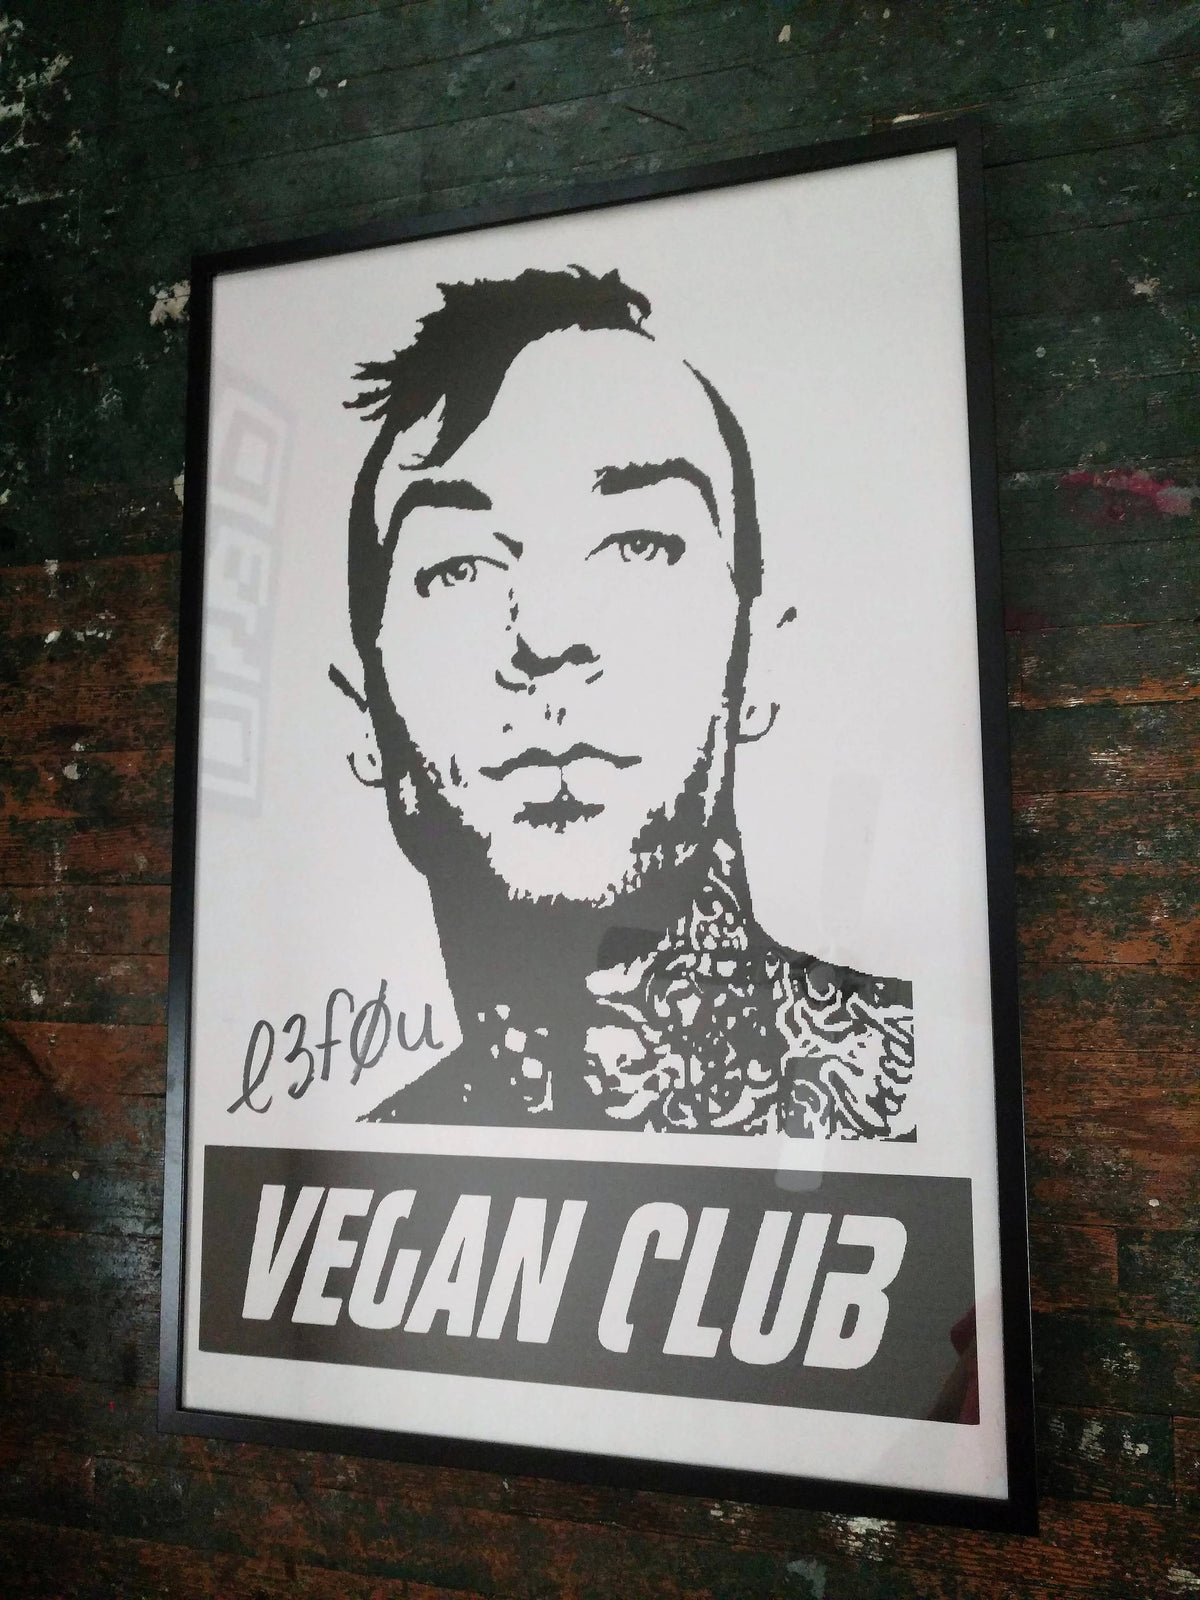 Framed on black wood Street Art NewsPrint Poster 24x36 Vegan Club feat Travis Barker signed by LeFou - pic @thekatvond @chefitophoto @street_art_los_angeles